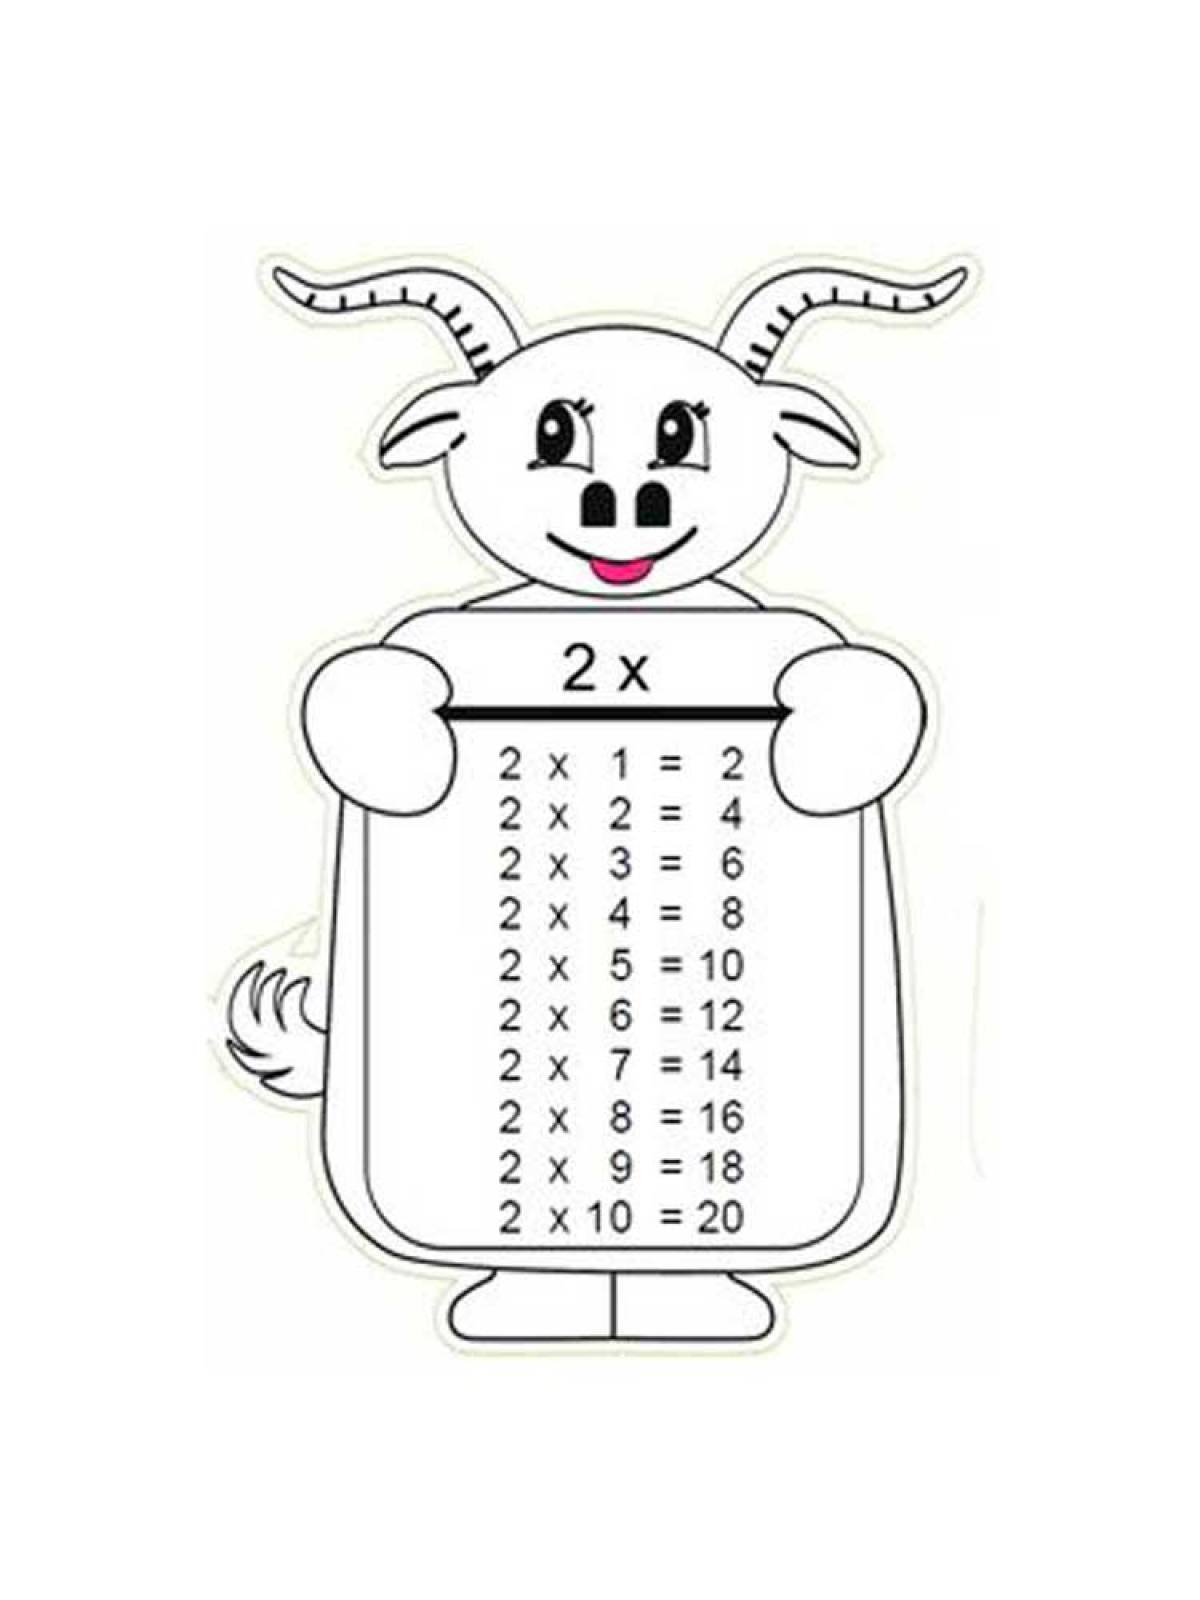 Multiplication table 10